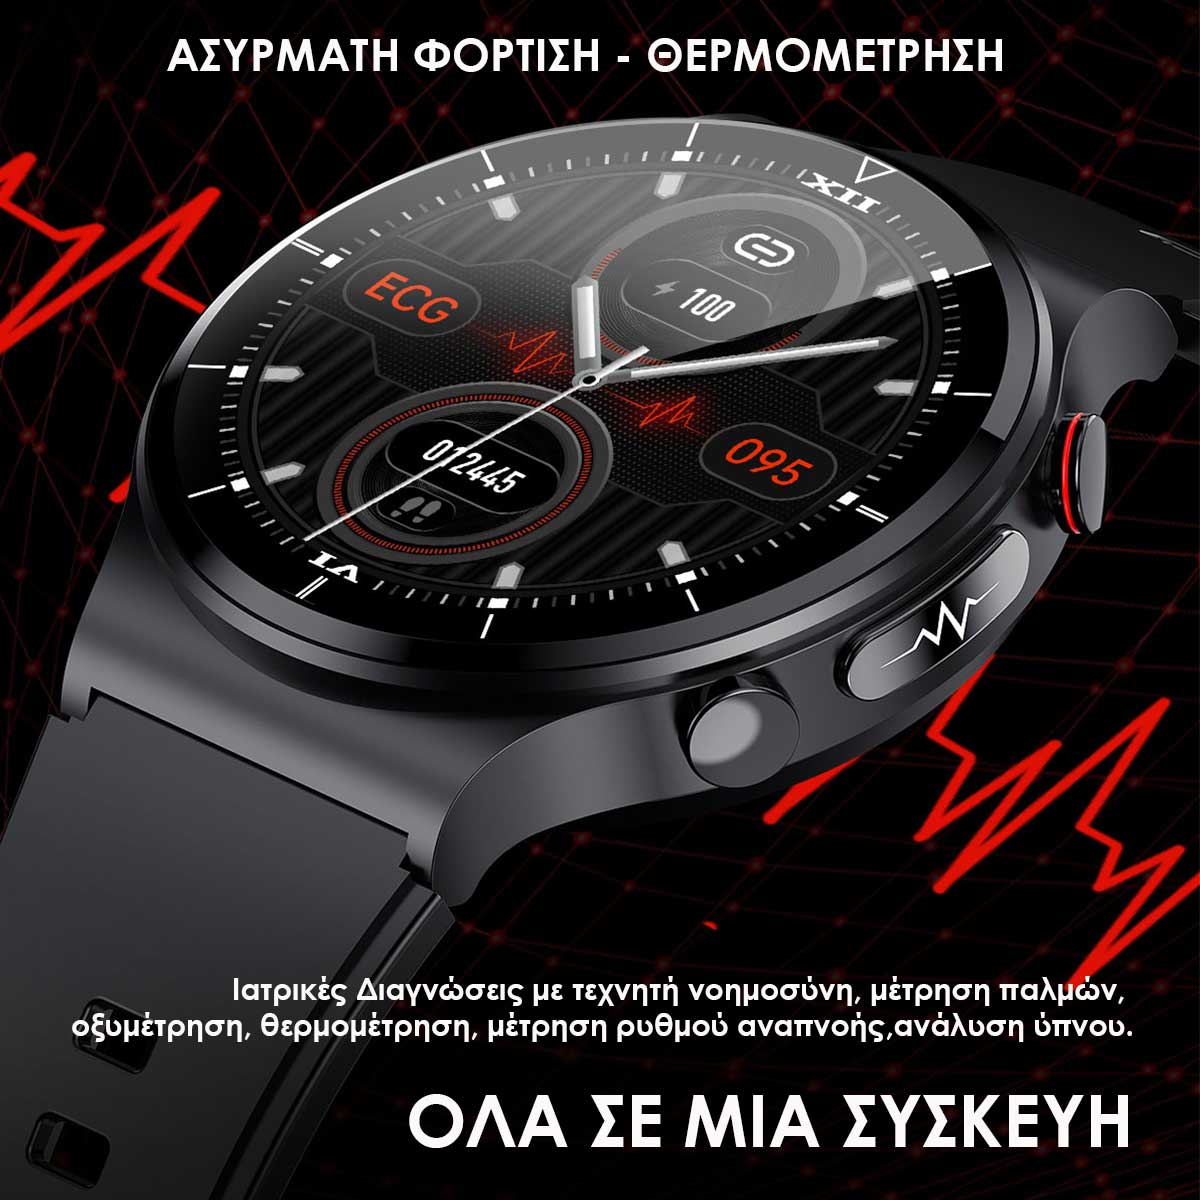 E88 Smart Watch